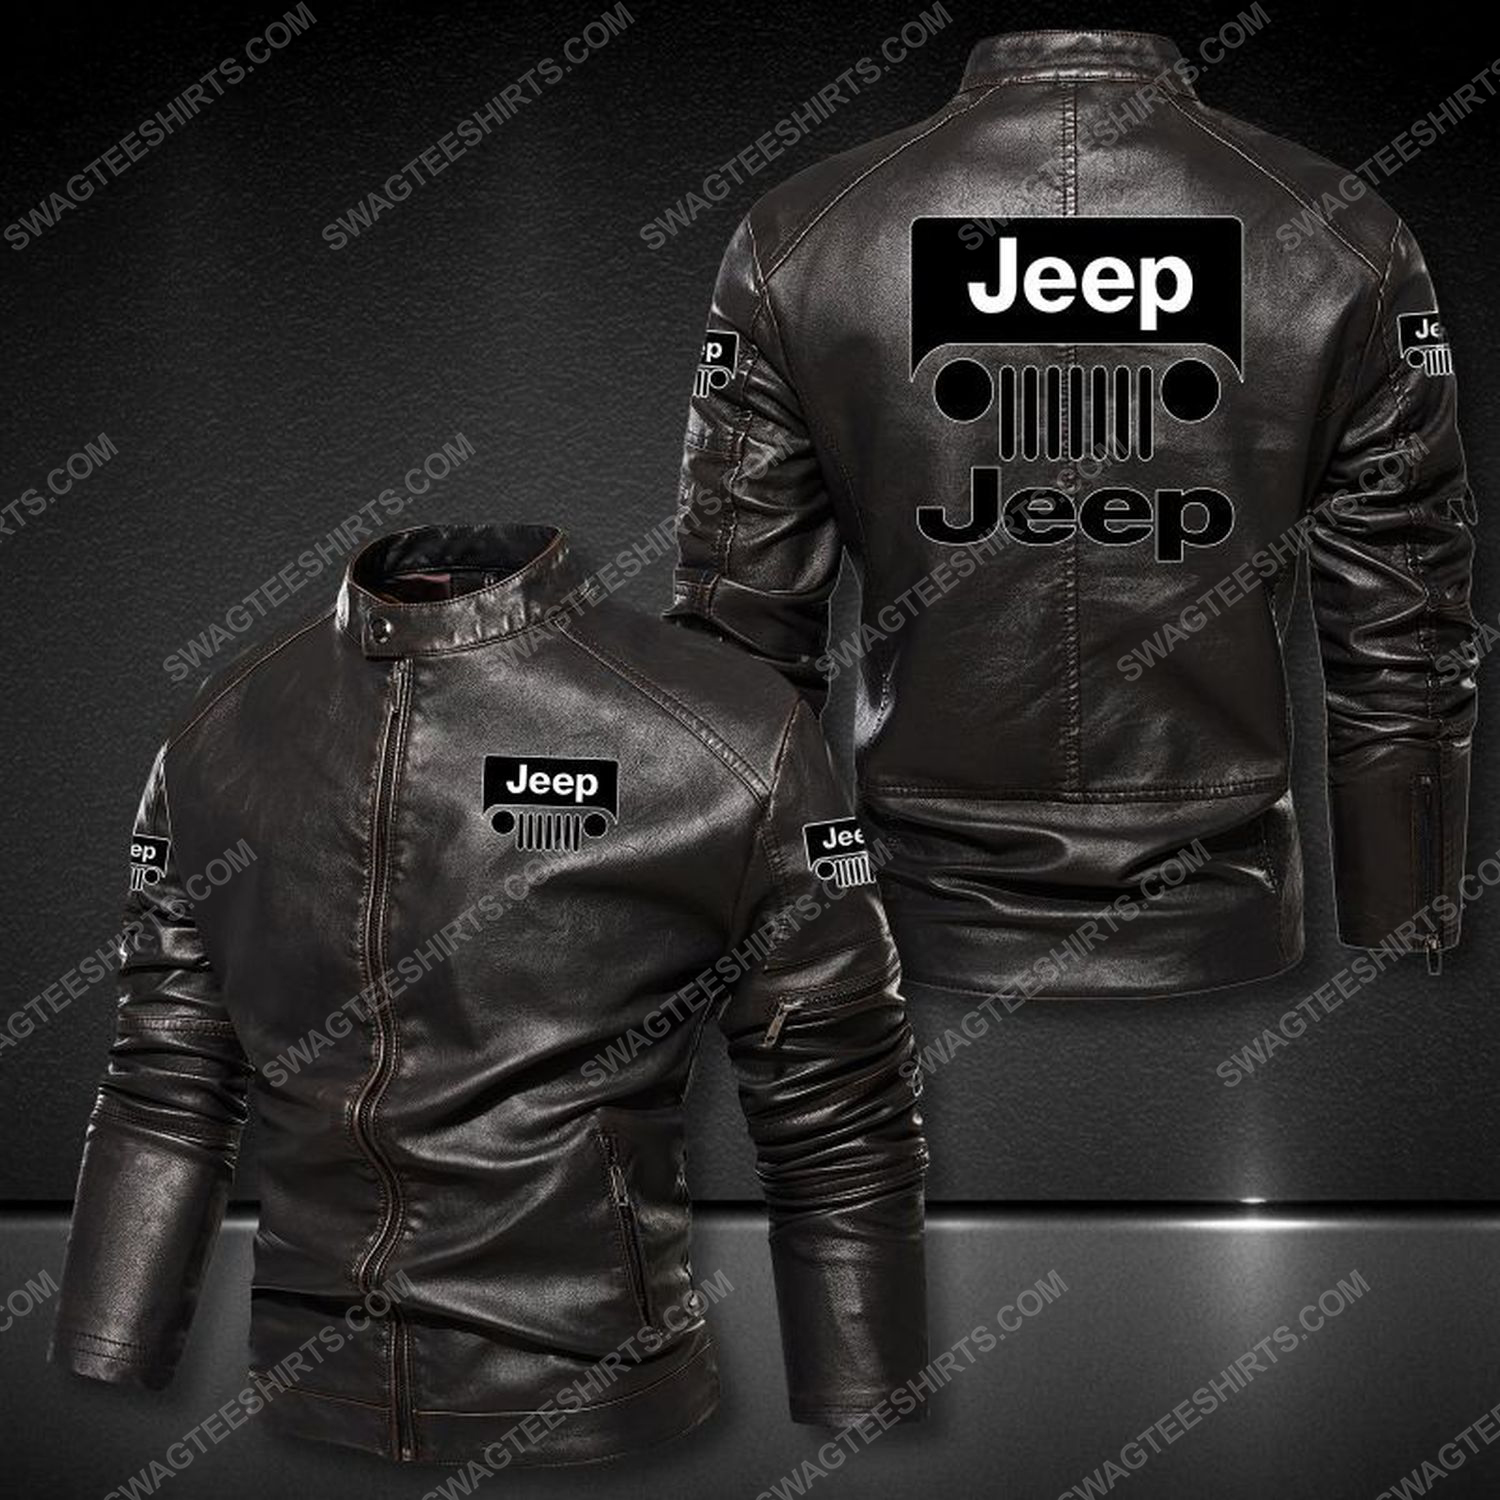 Jeep racing car leather jacket 1 - Copy